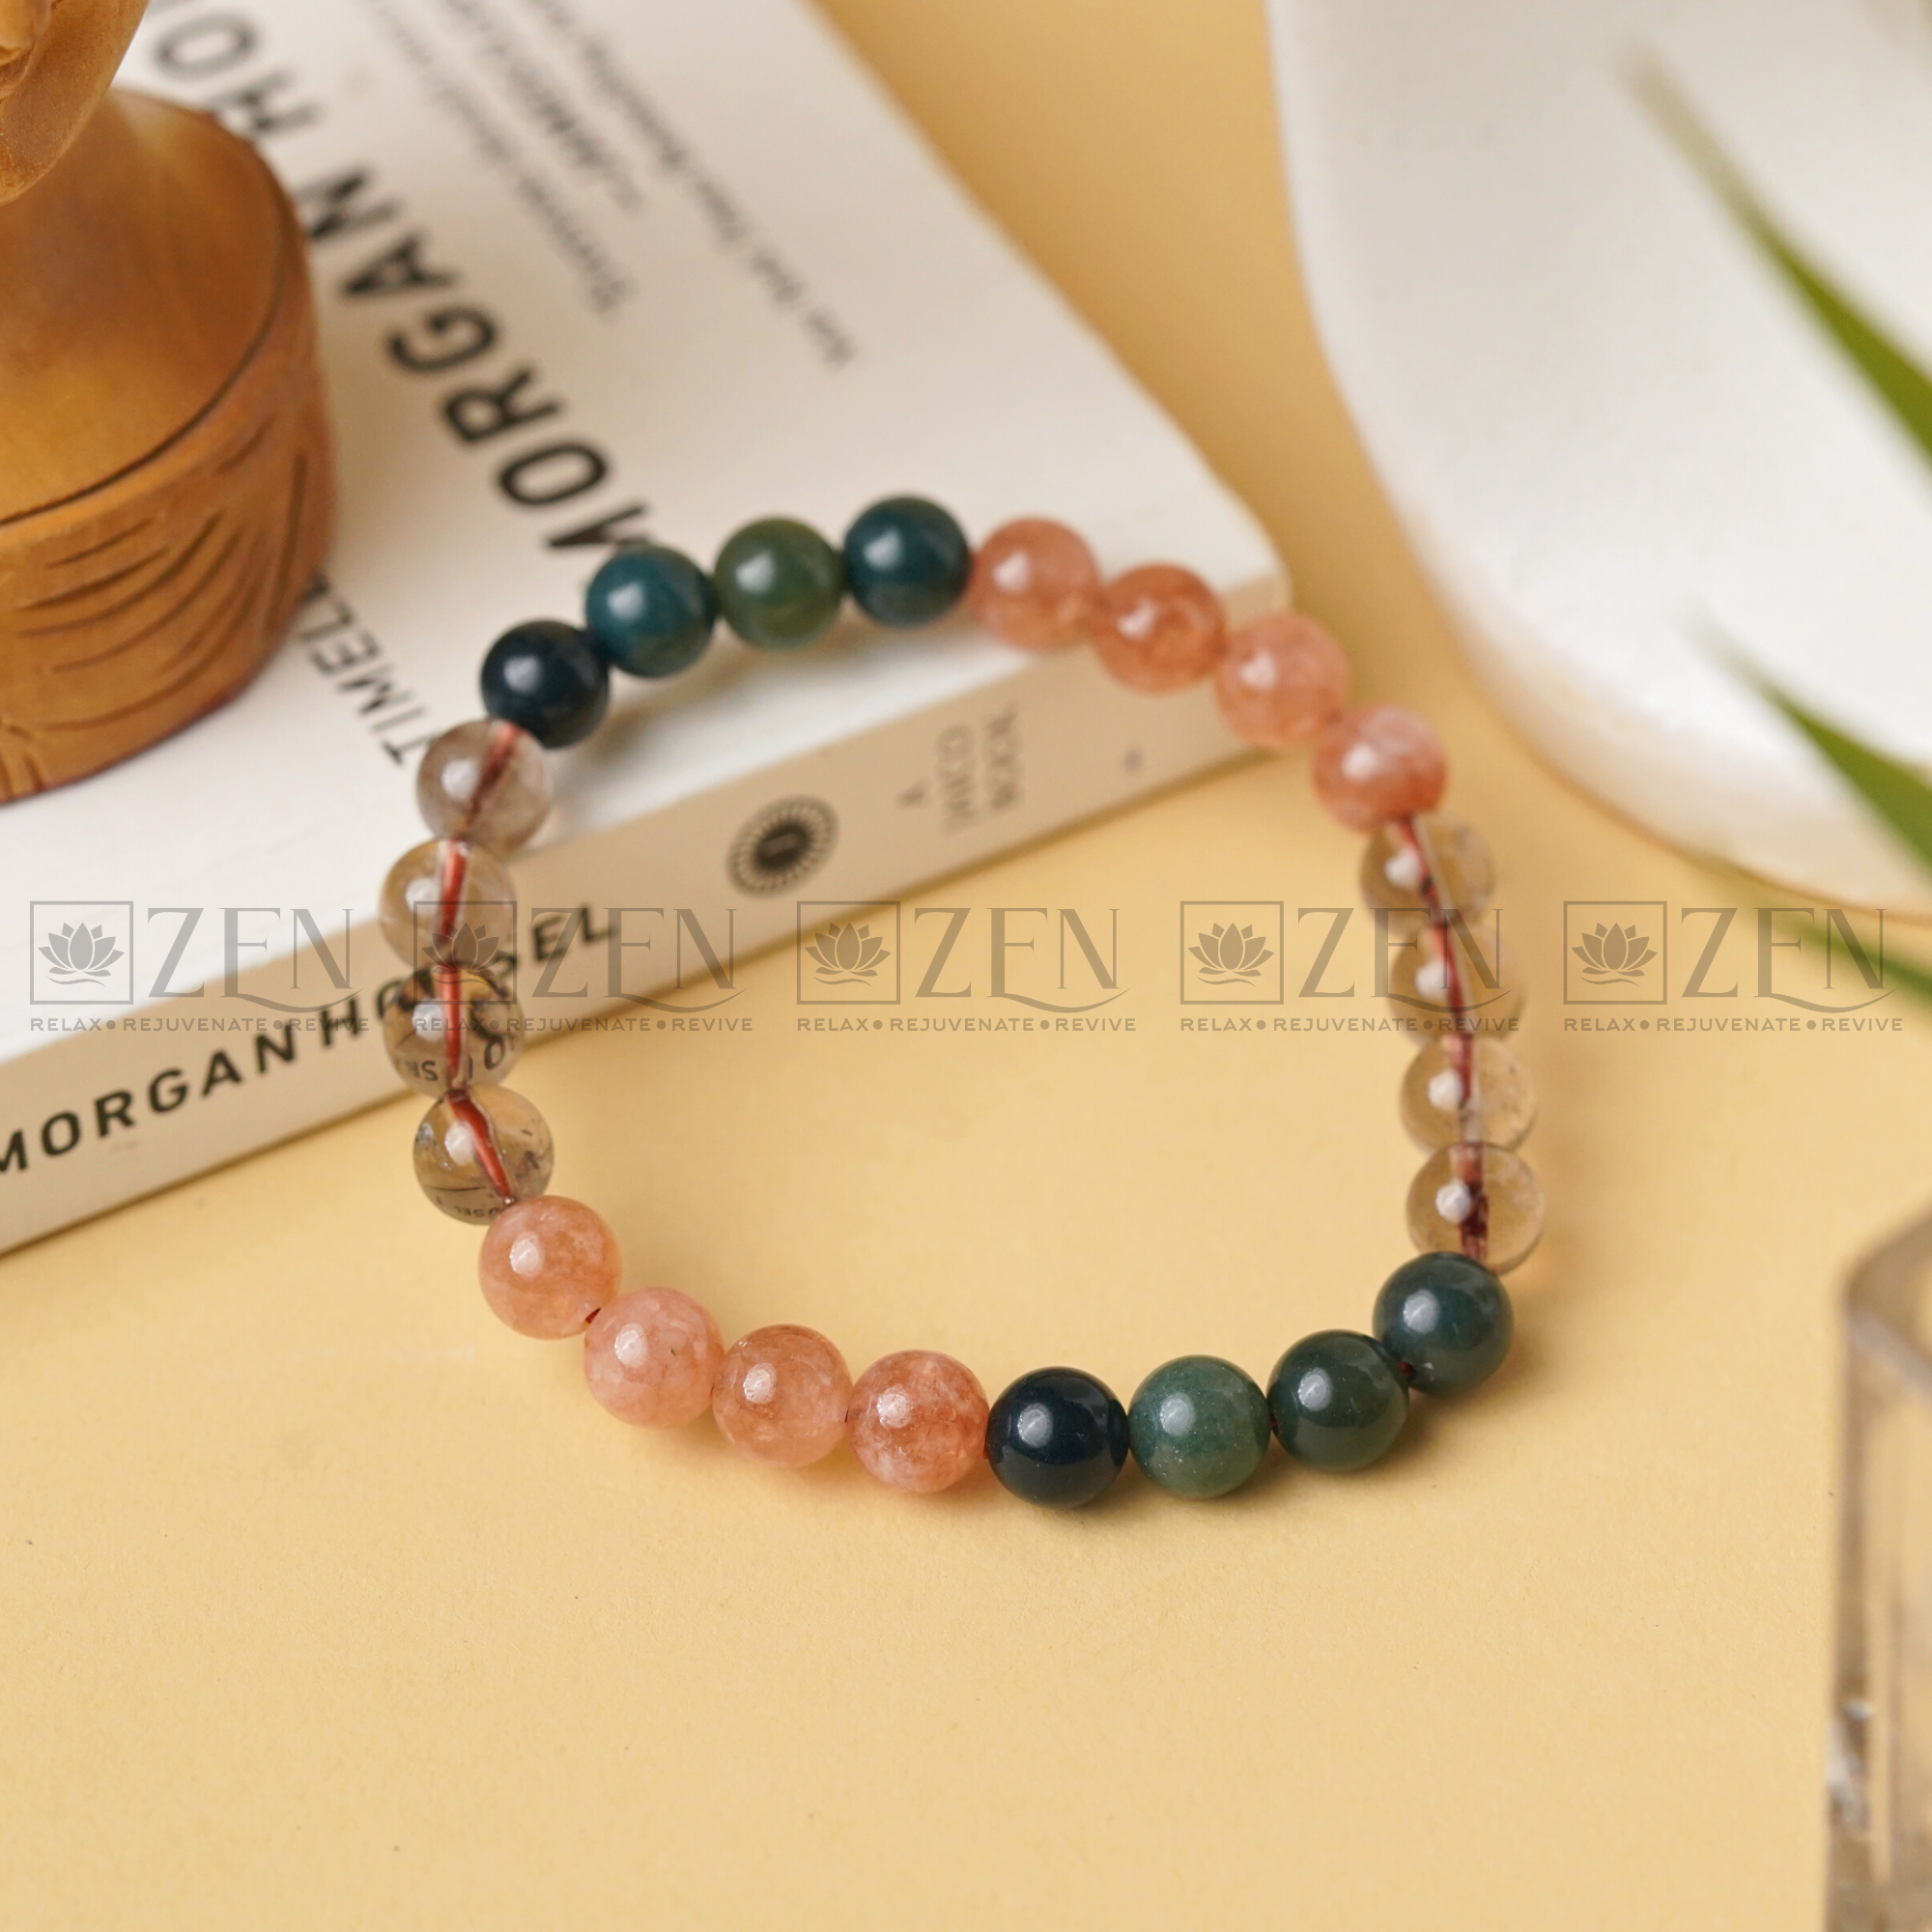 Buy GaiaGems Zen bracelet with Buddhist mantra Om mani padme hum Hindu  sacred symbol jewelry for mens Agate prayer beads Lava stone Yoga mala  at Amazonin